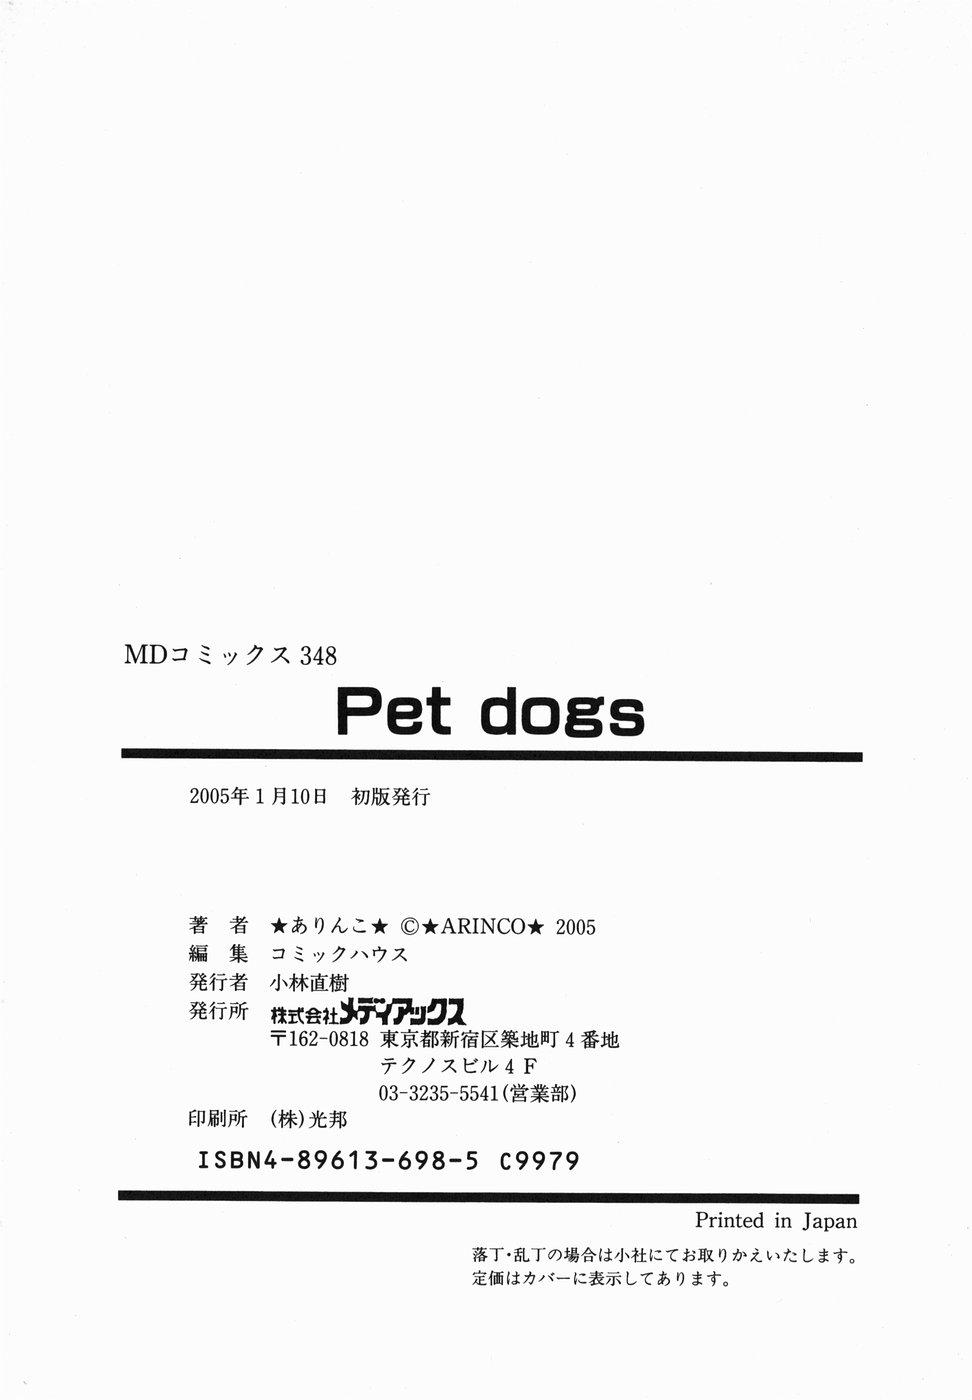 Pet dogs 157